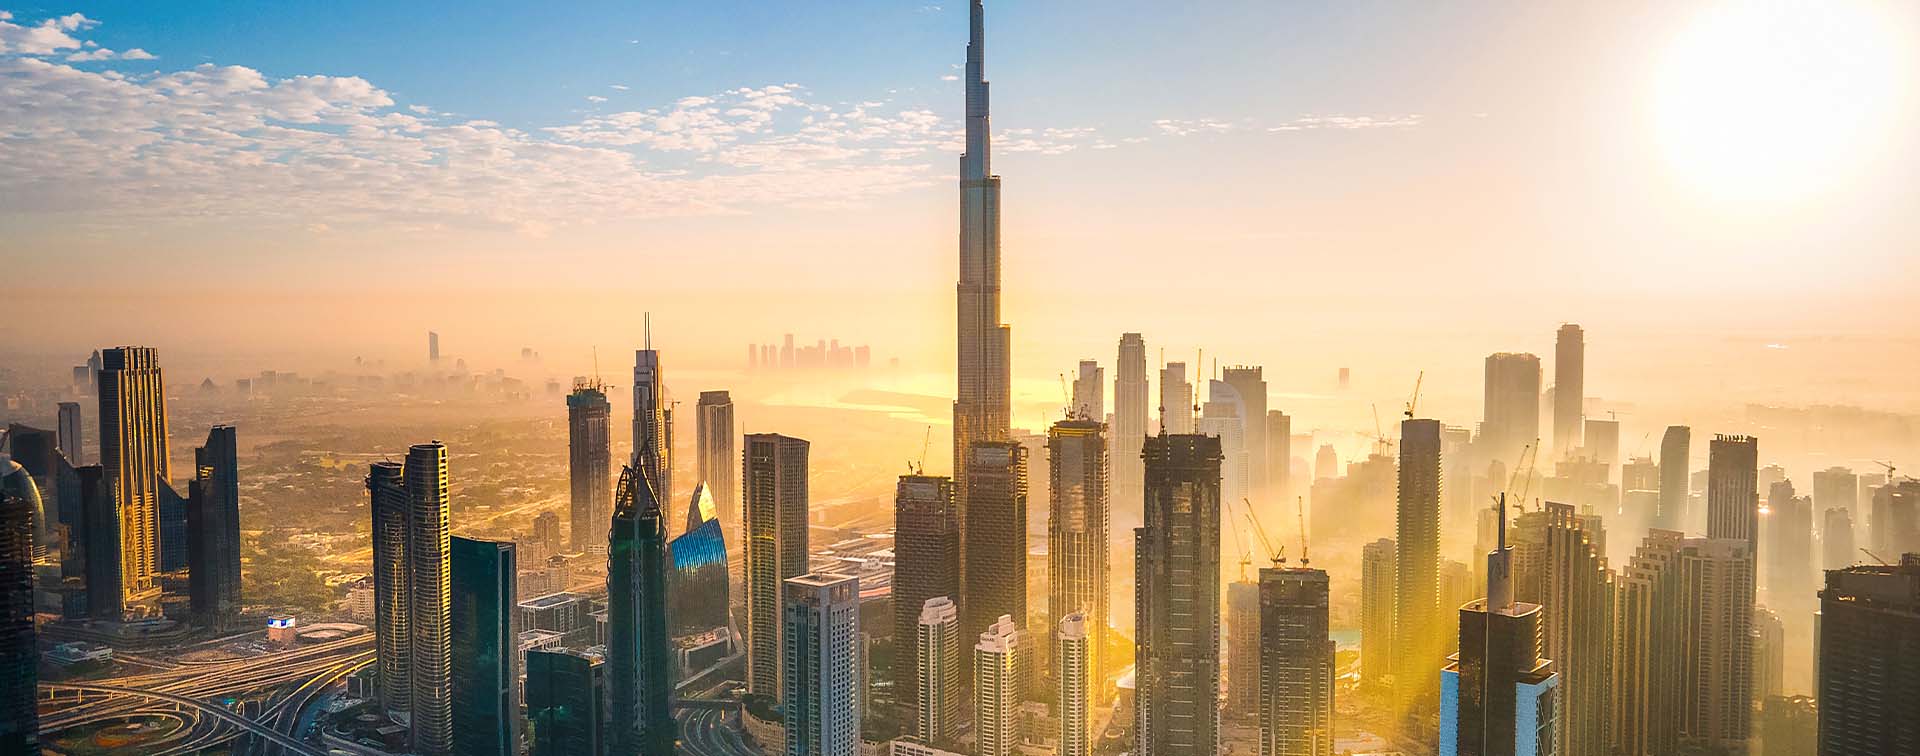 Skyline in Dubai, UAE, illuminated by a glowing sun